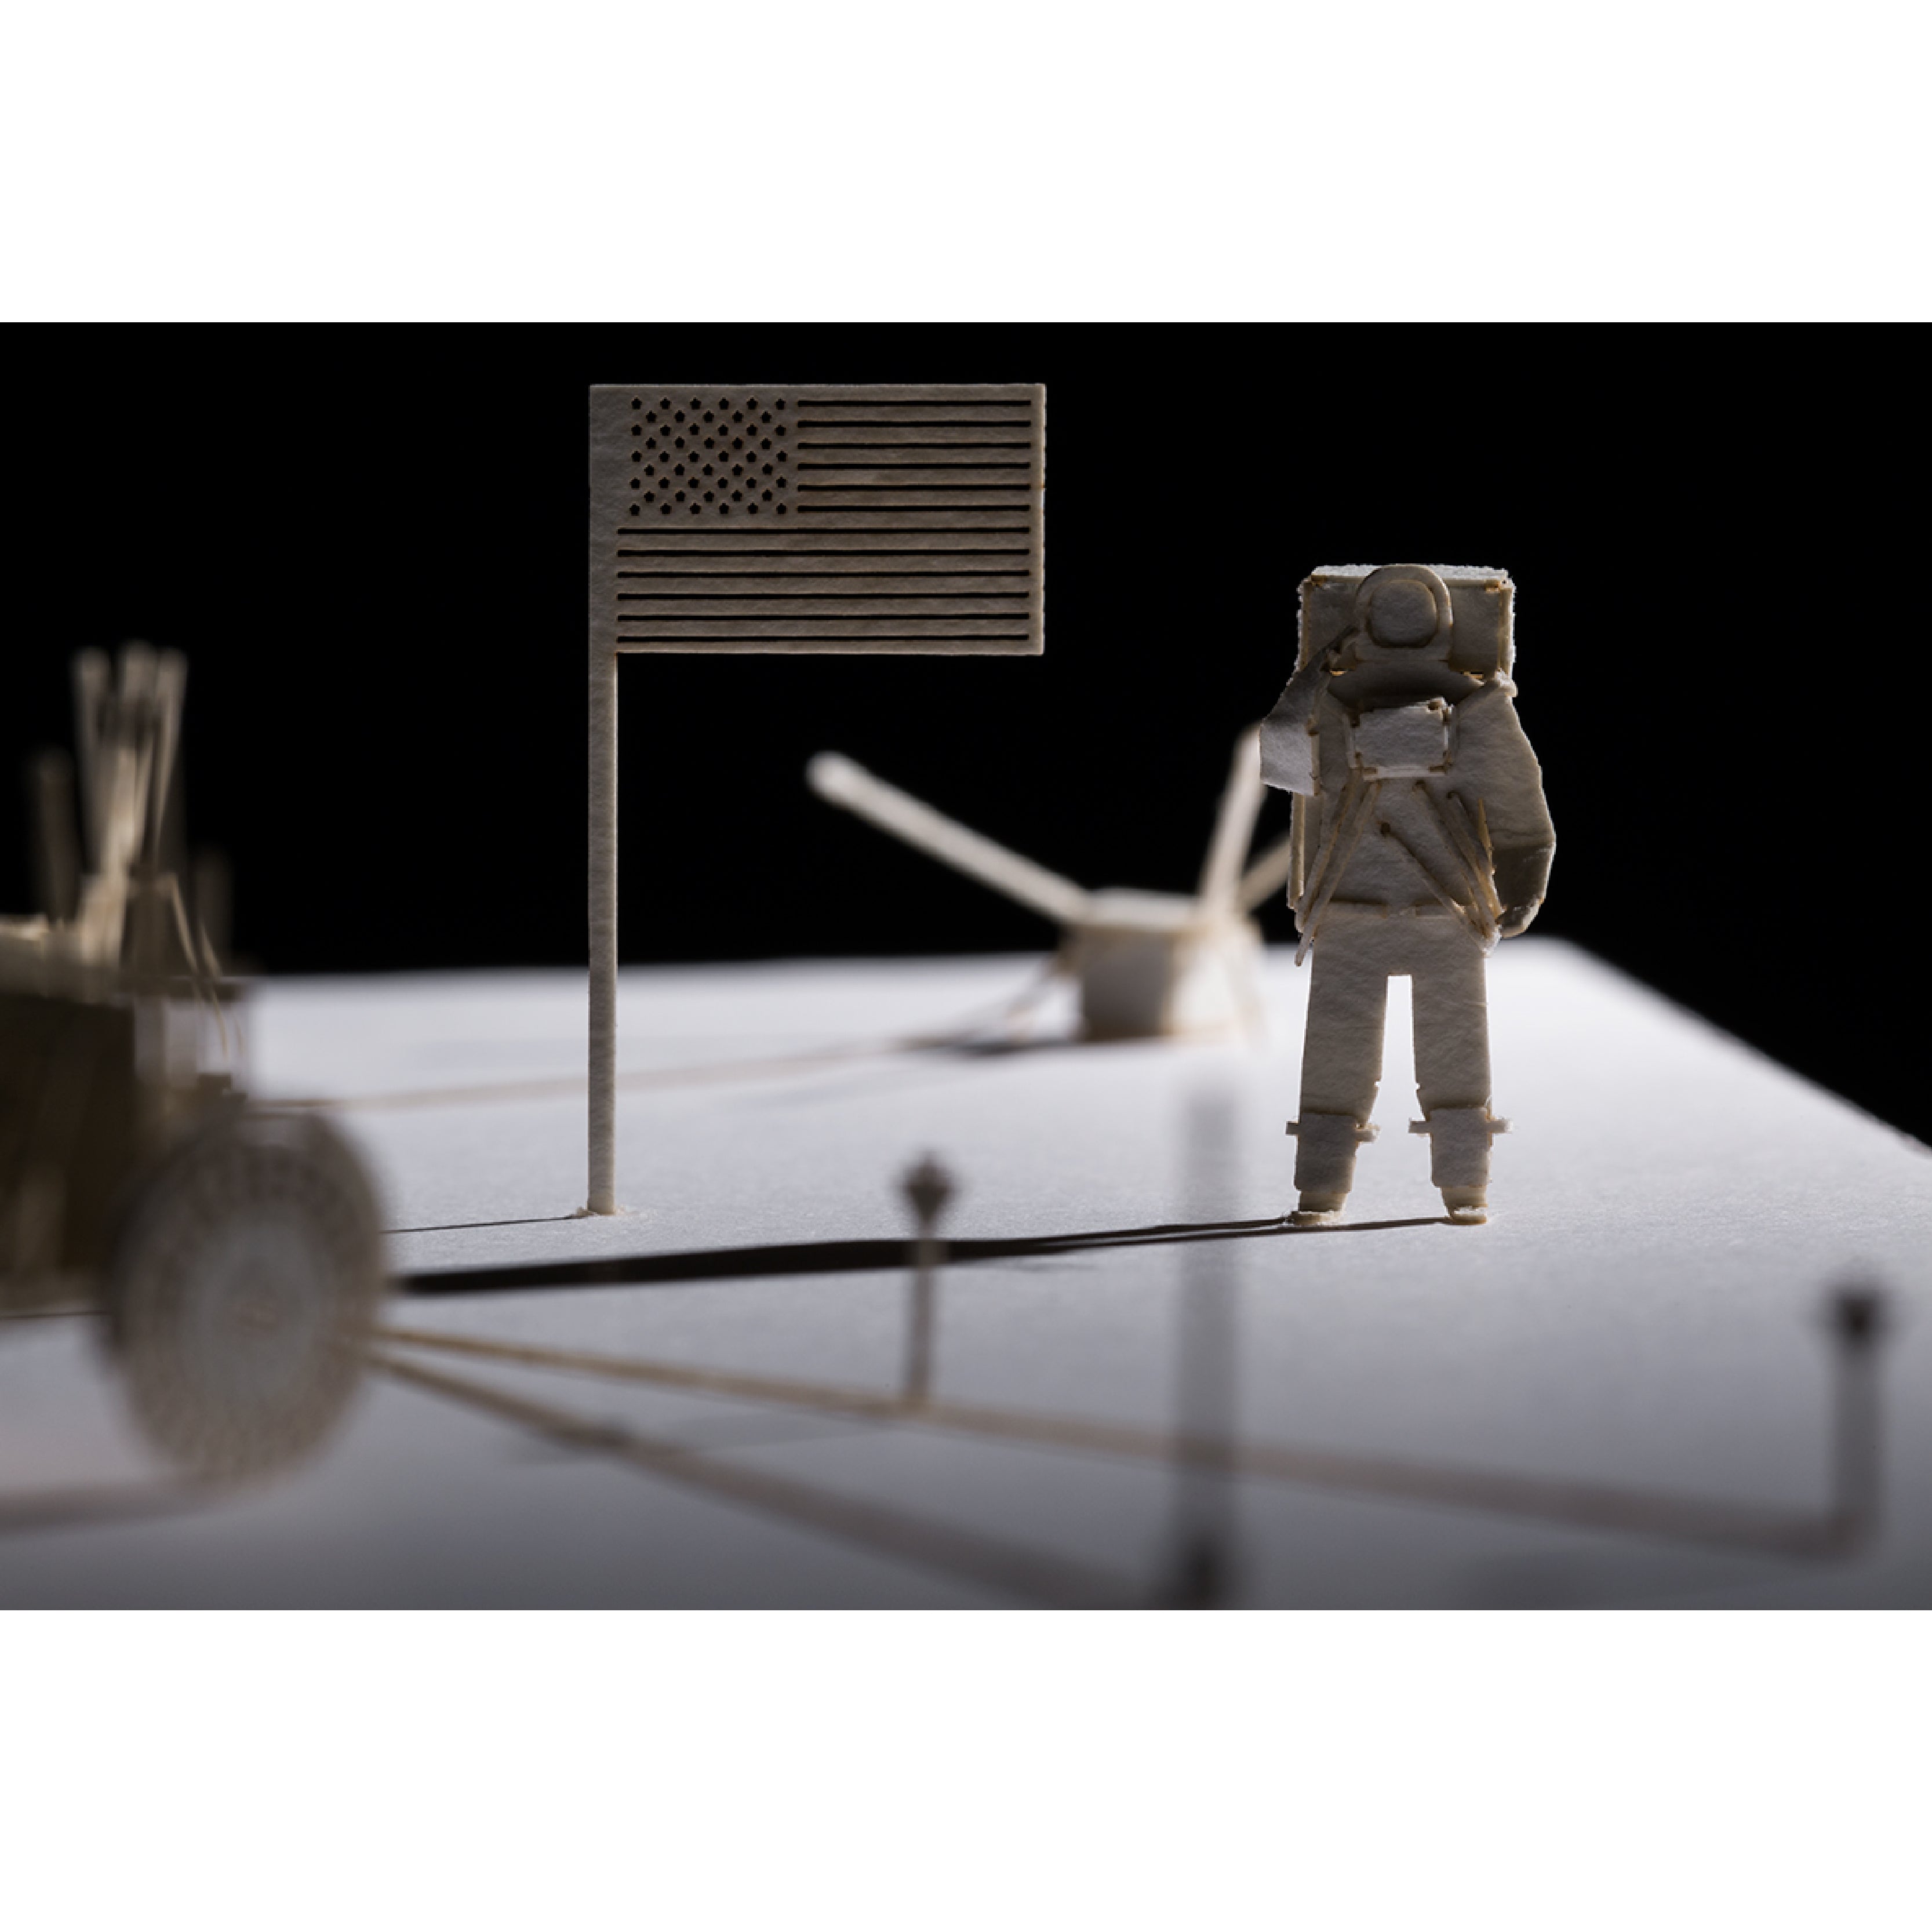 No.66 LRV: Lunar Roving Vehicle + ALSEP: Apollo Lunar Surface Experiments Package